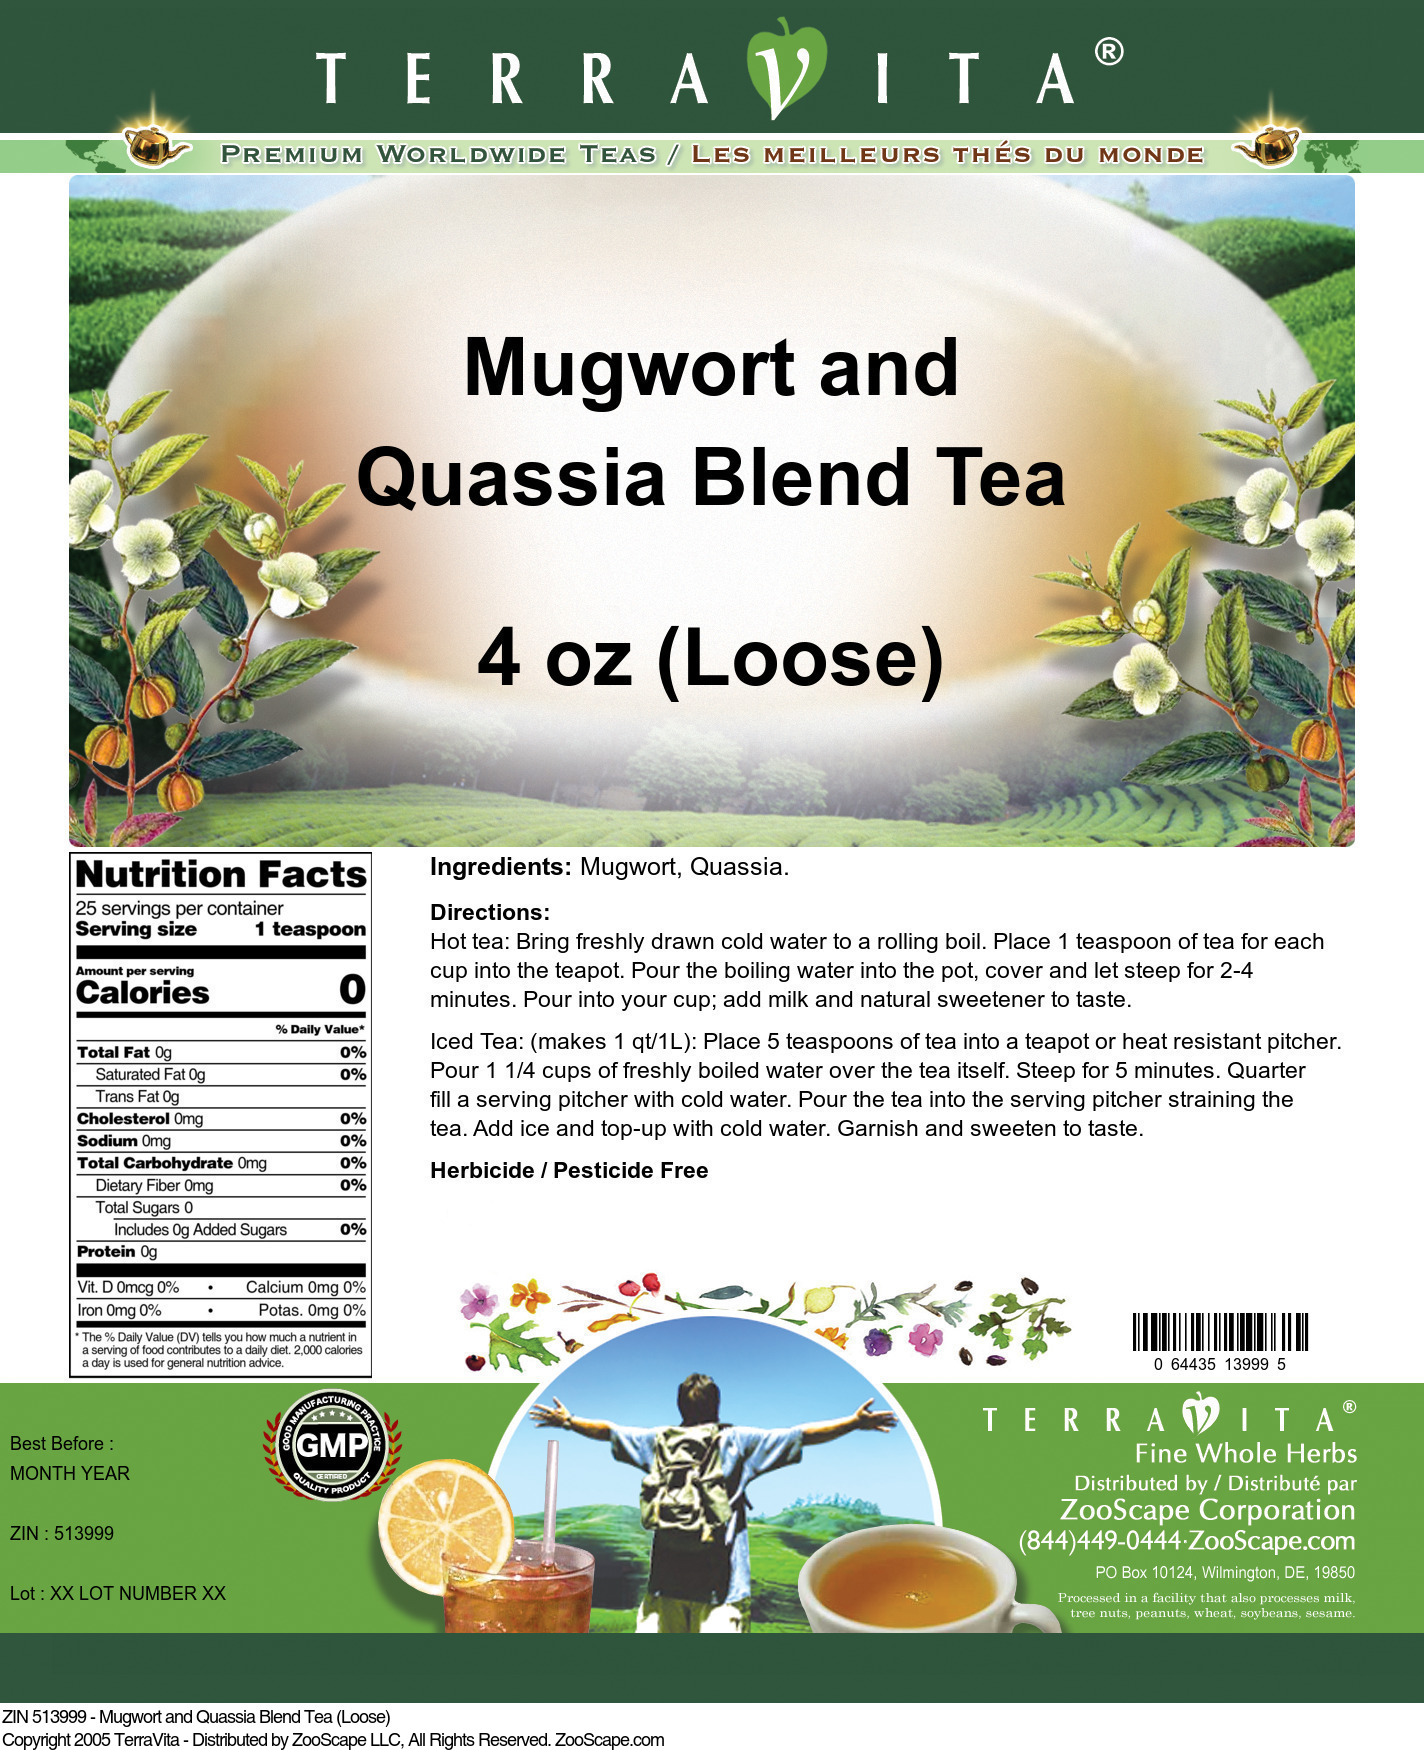 Mugwort and Quassia Blend Tea (Loose) - Label